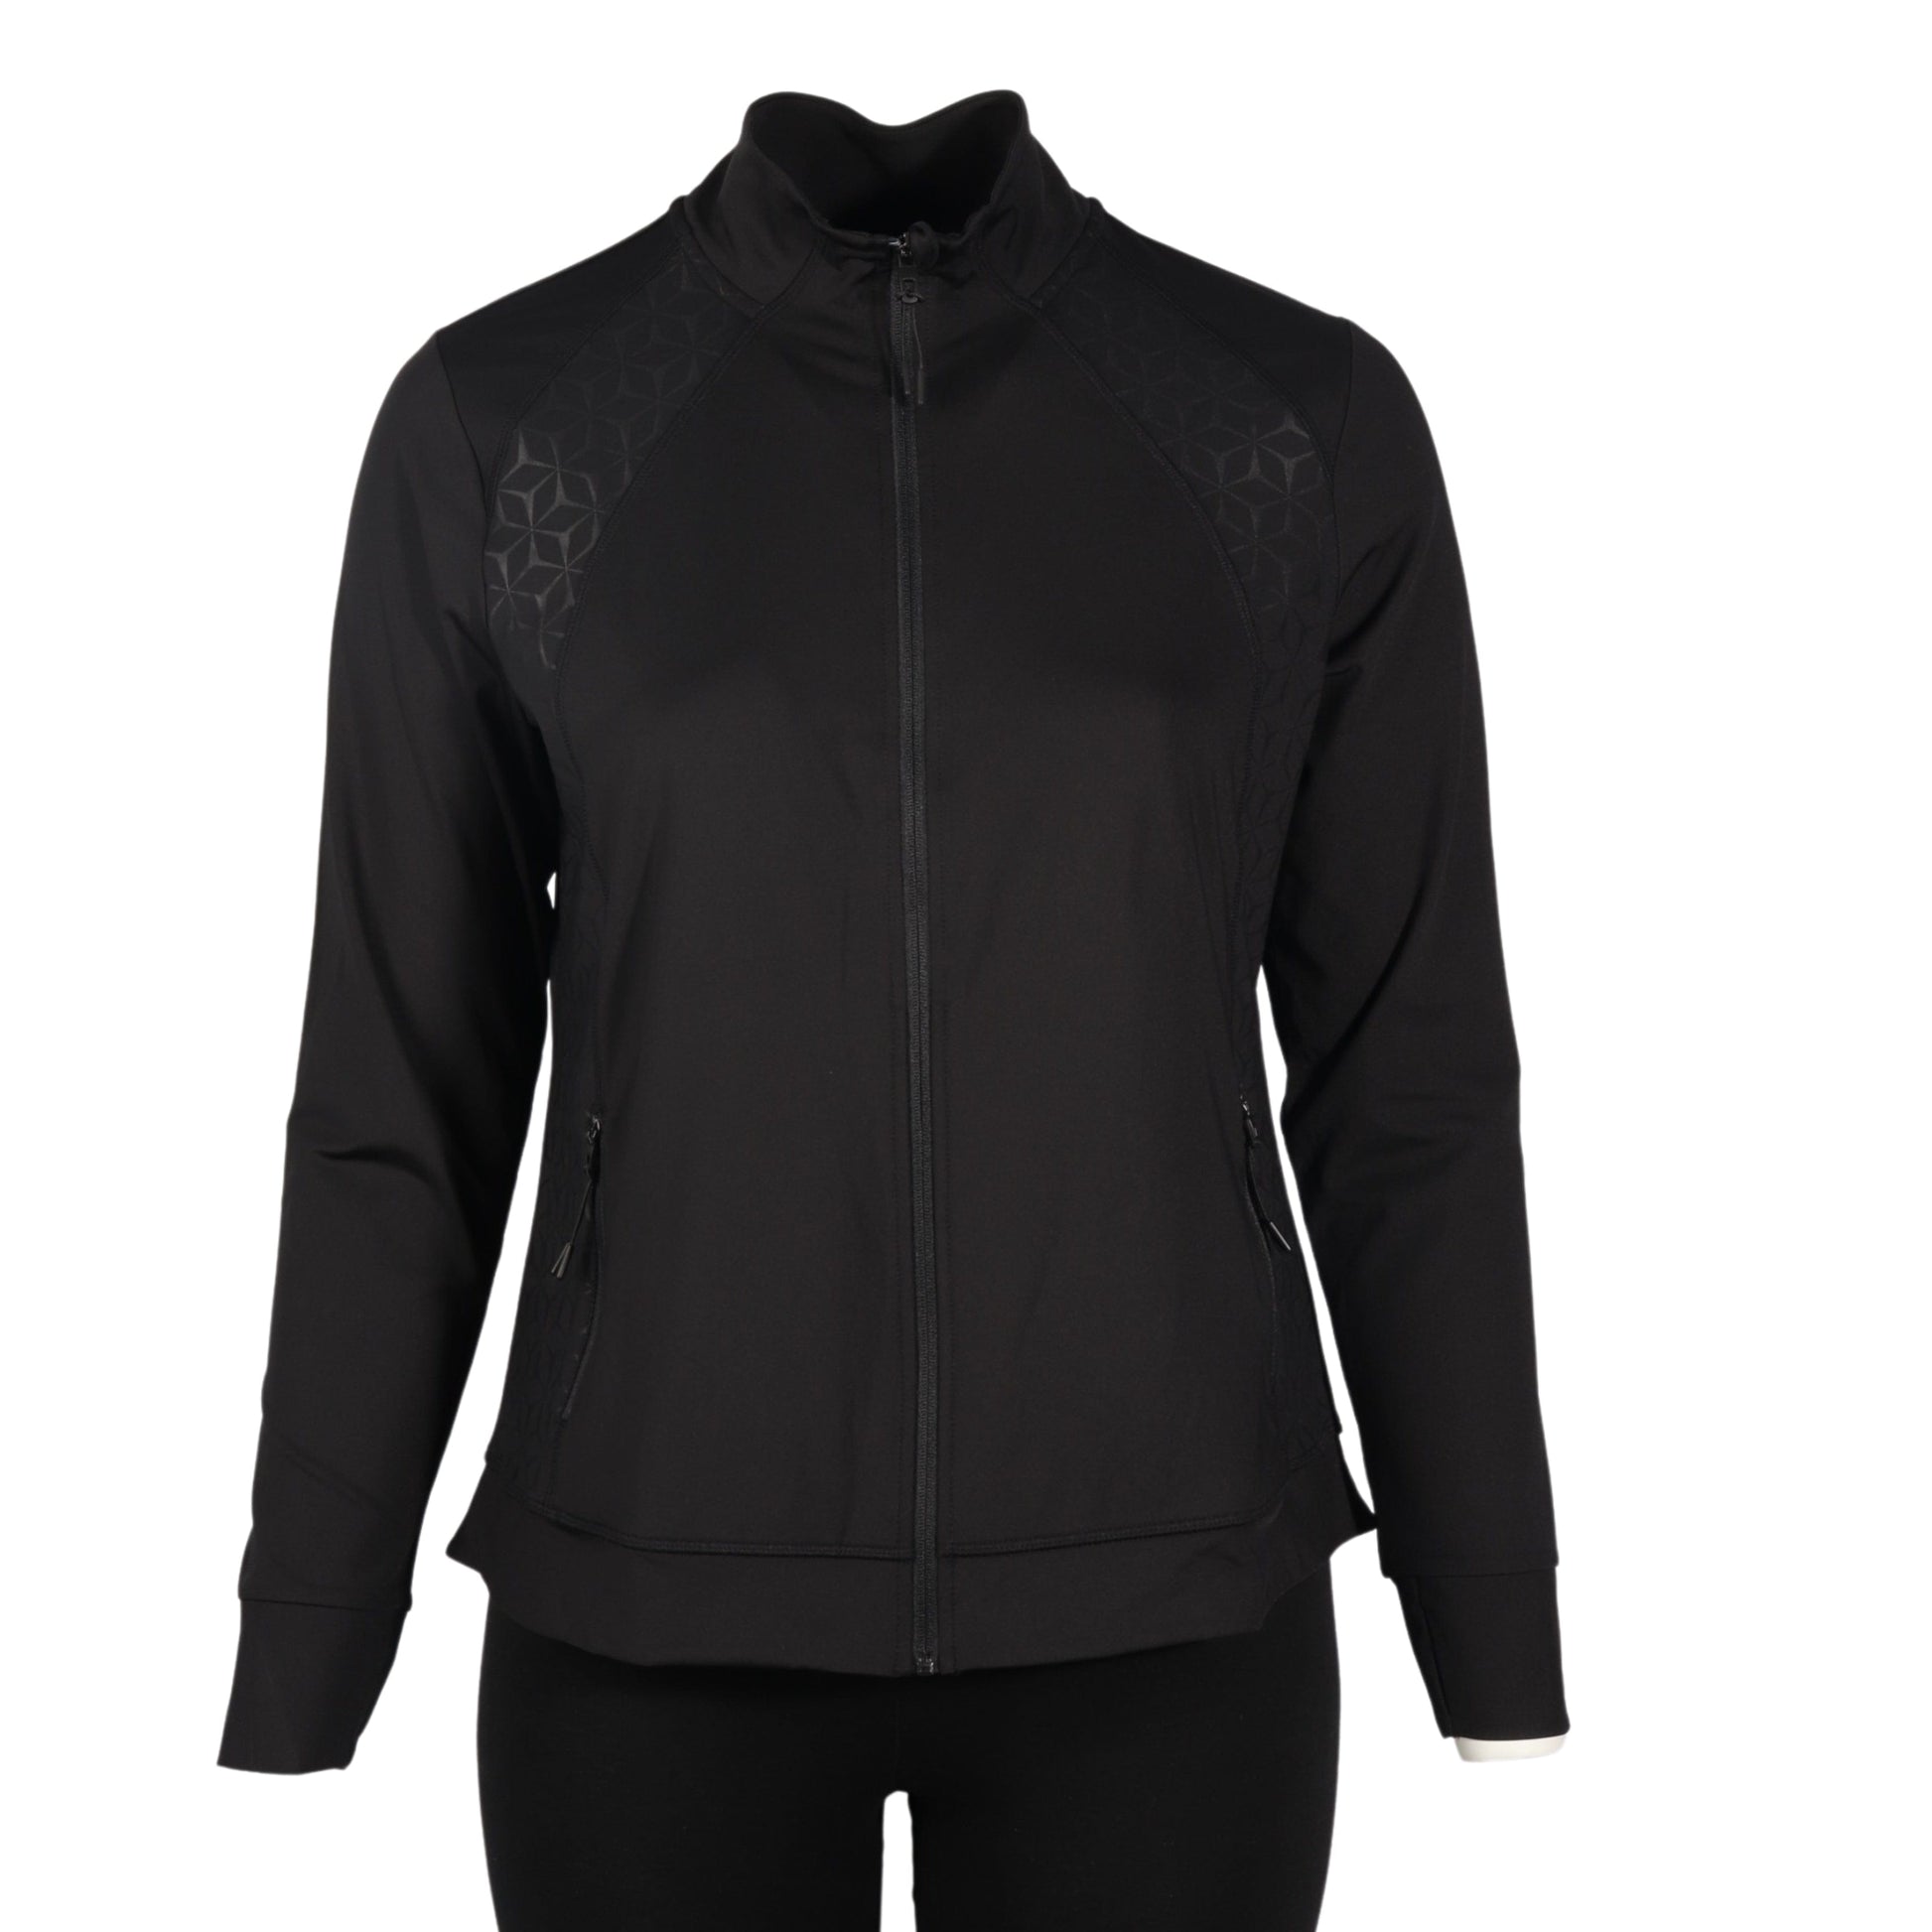 Xersion Performance Wear White/Black Athletic Zip-Up Jacket Size